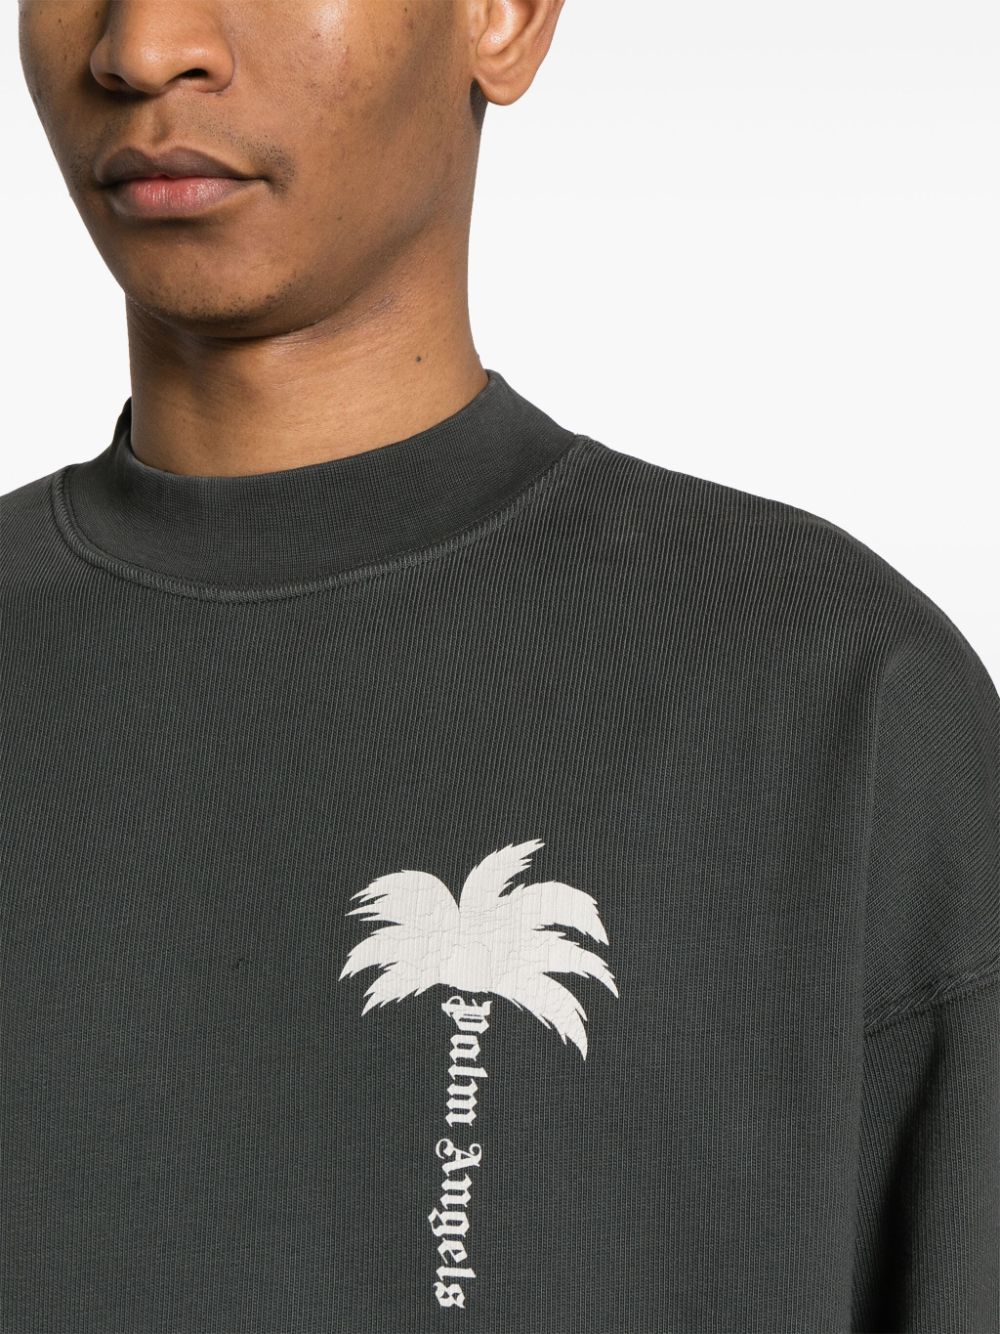 Palm motif sweatshirt